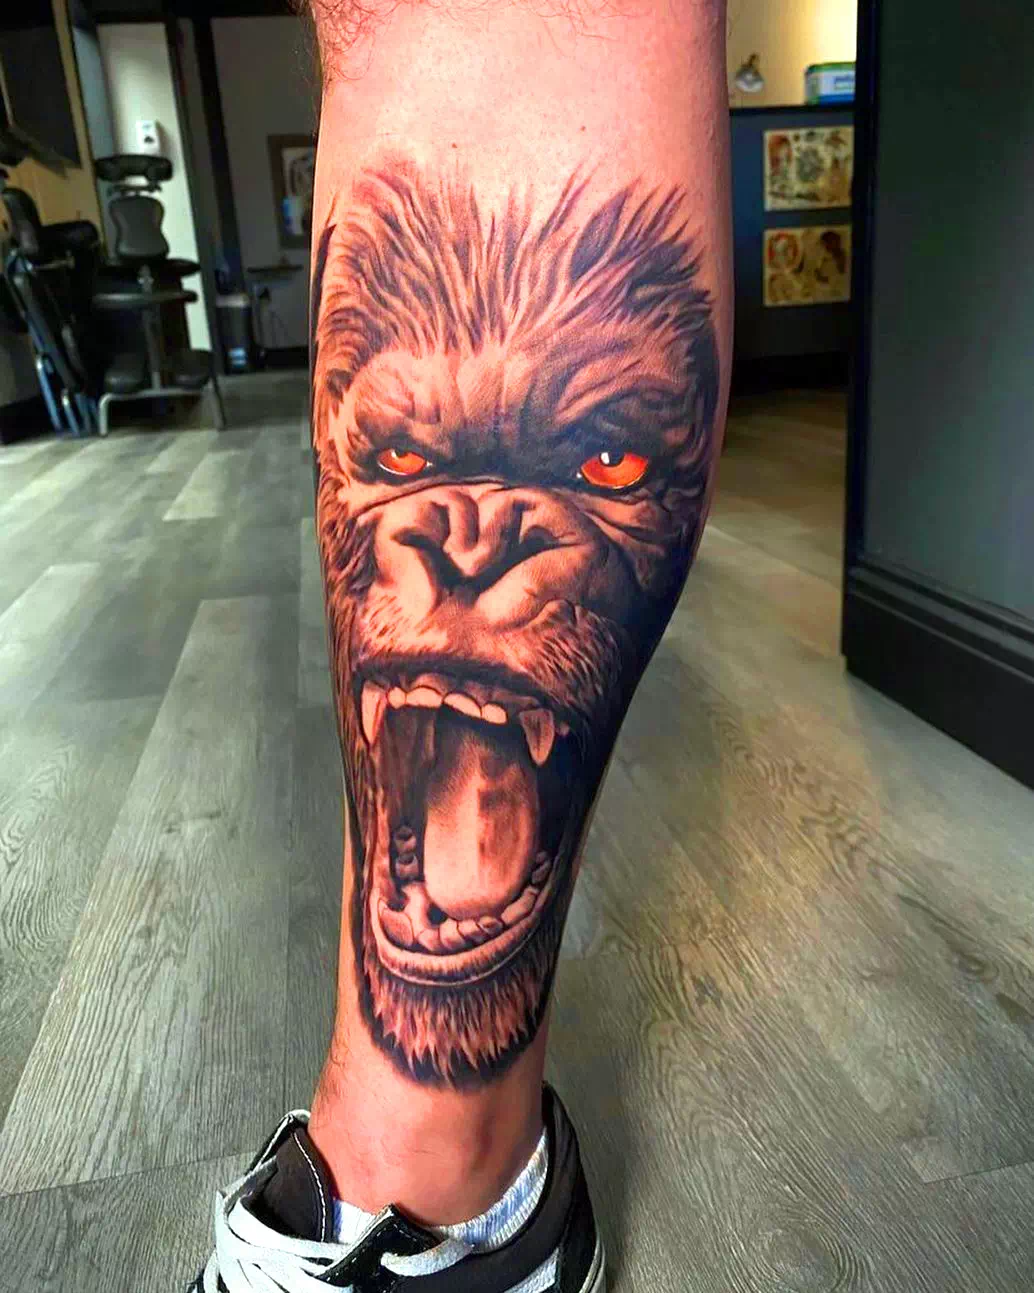 Tatuaje de una pantorrilla de gorila que da miedo 1